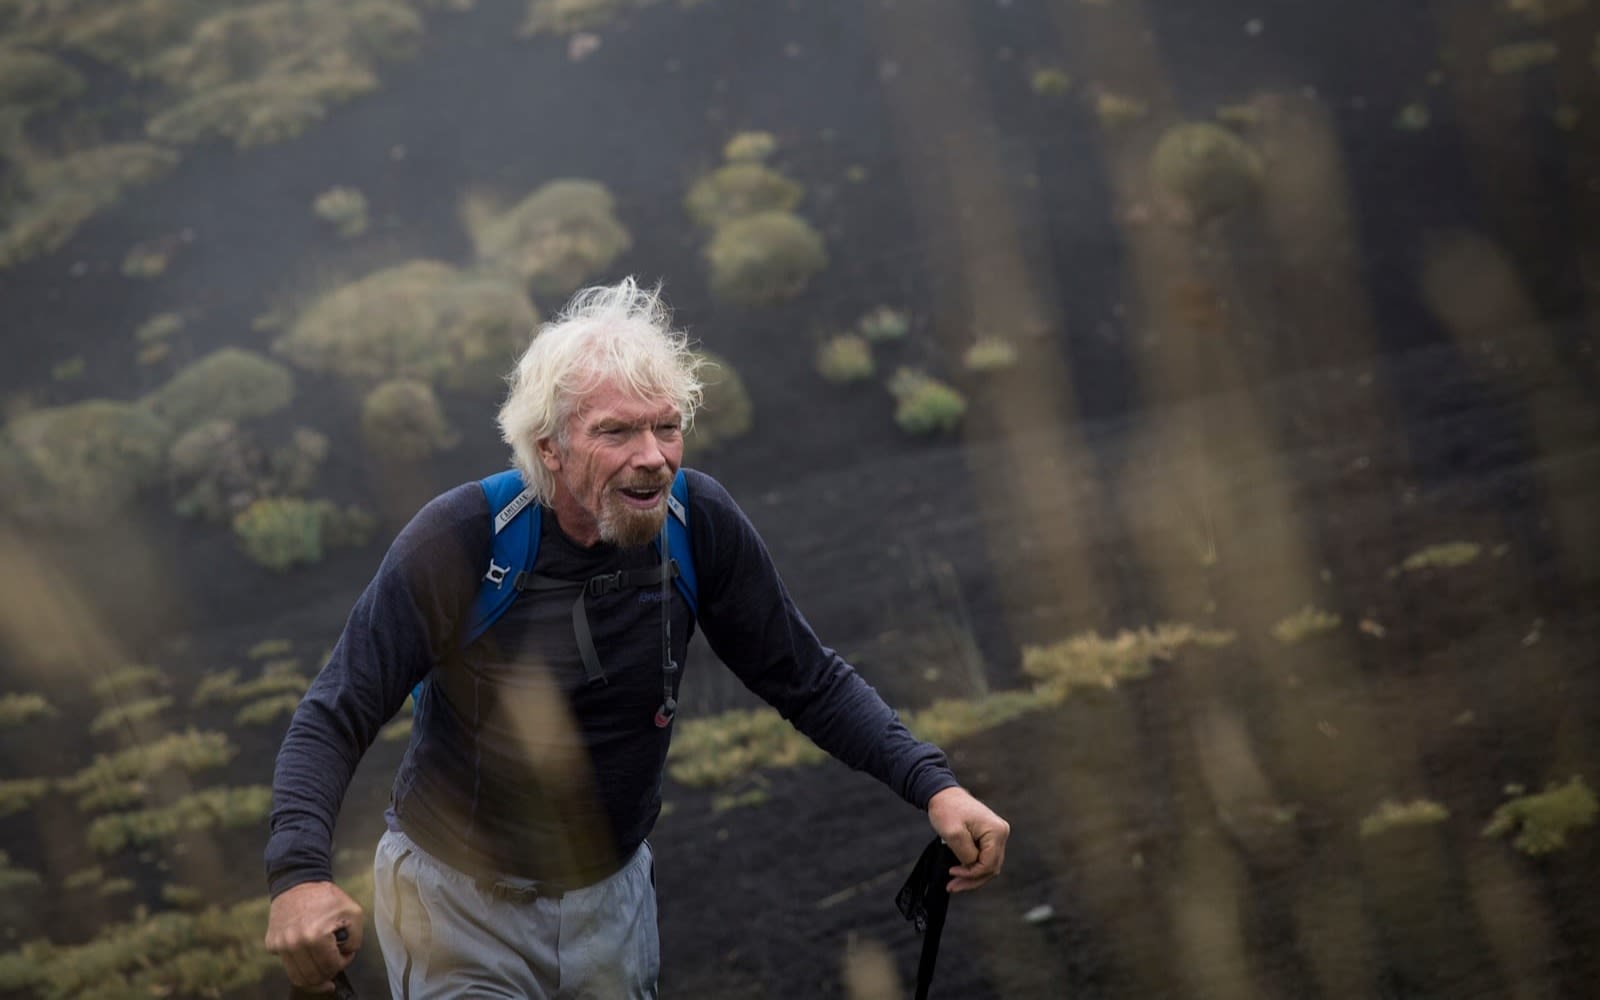 Richard Branson hikinh up a hill